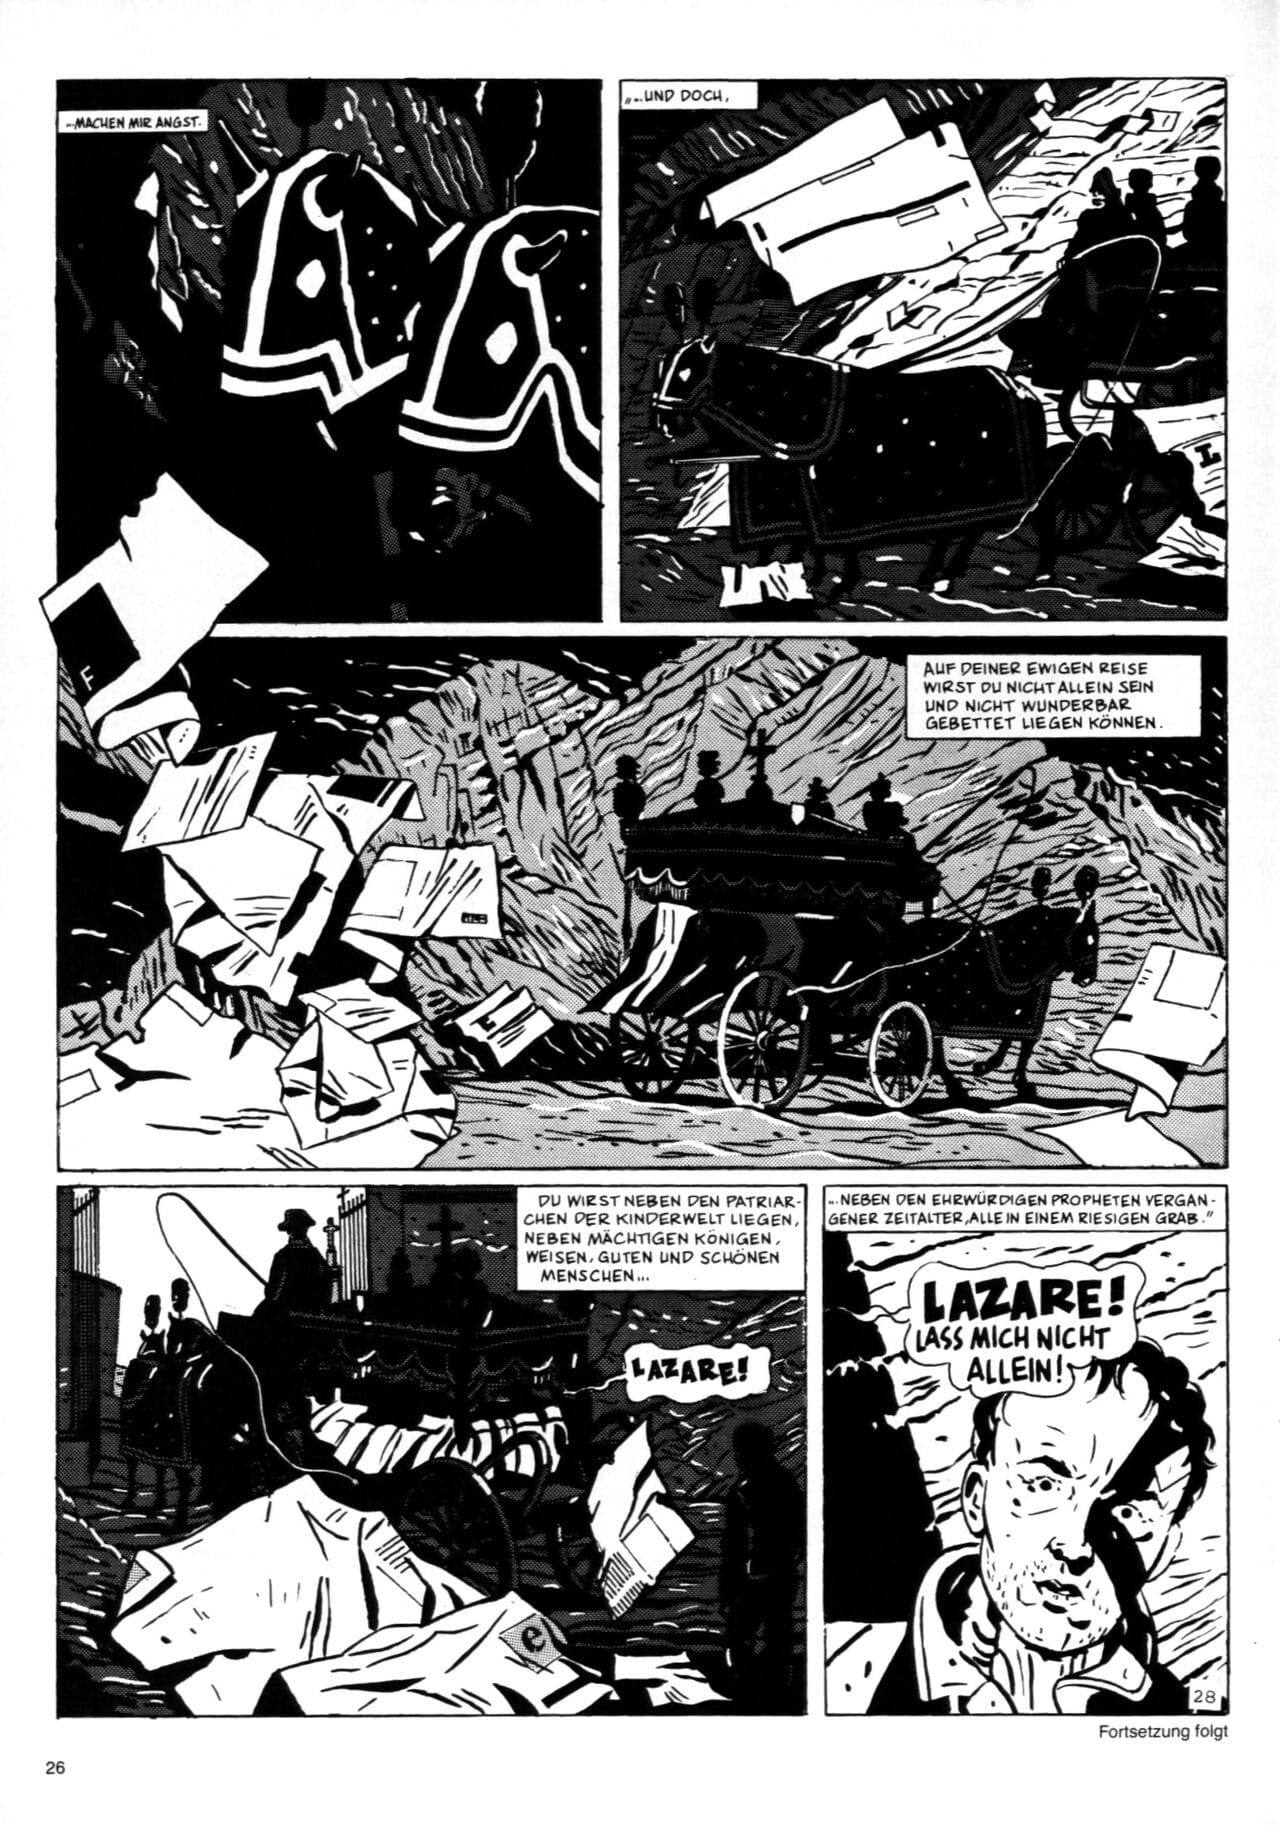 schwermetall #095 phần 2 page 1